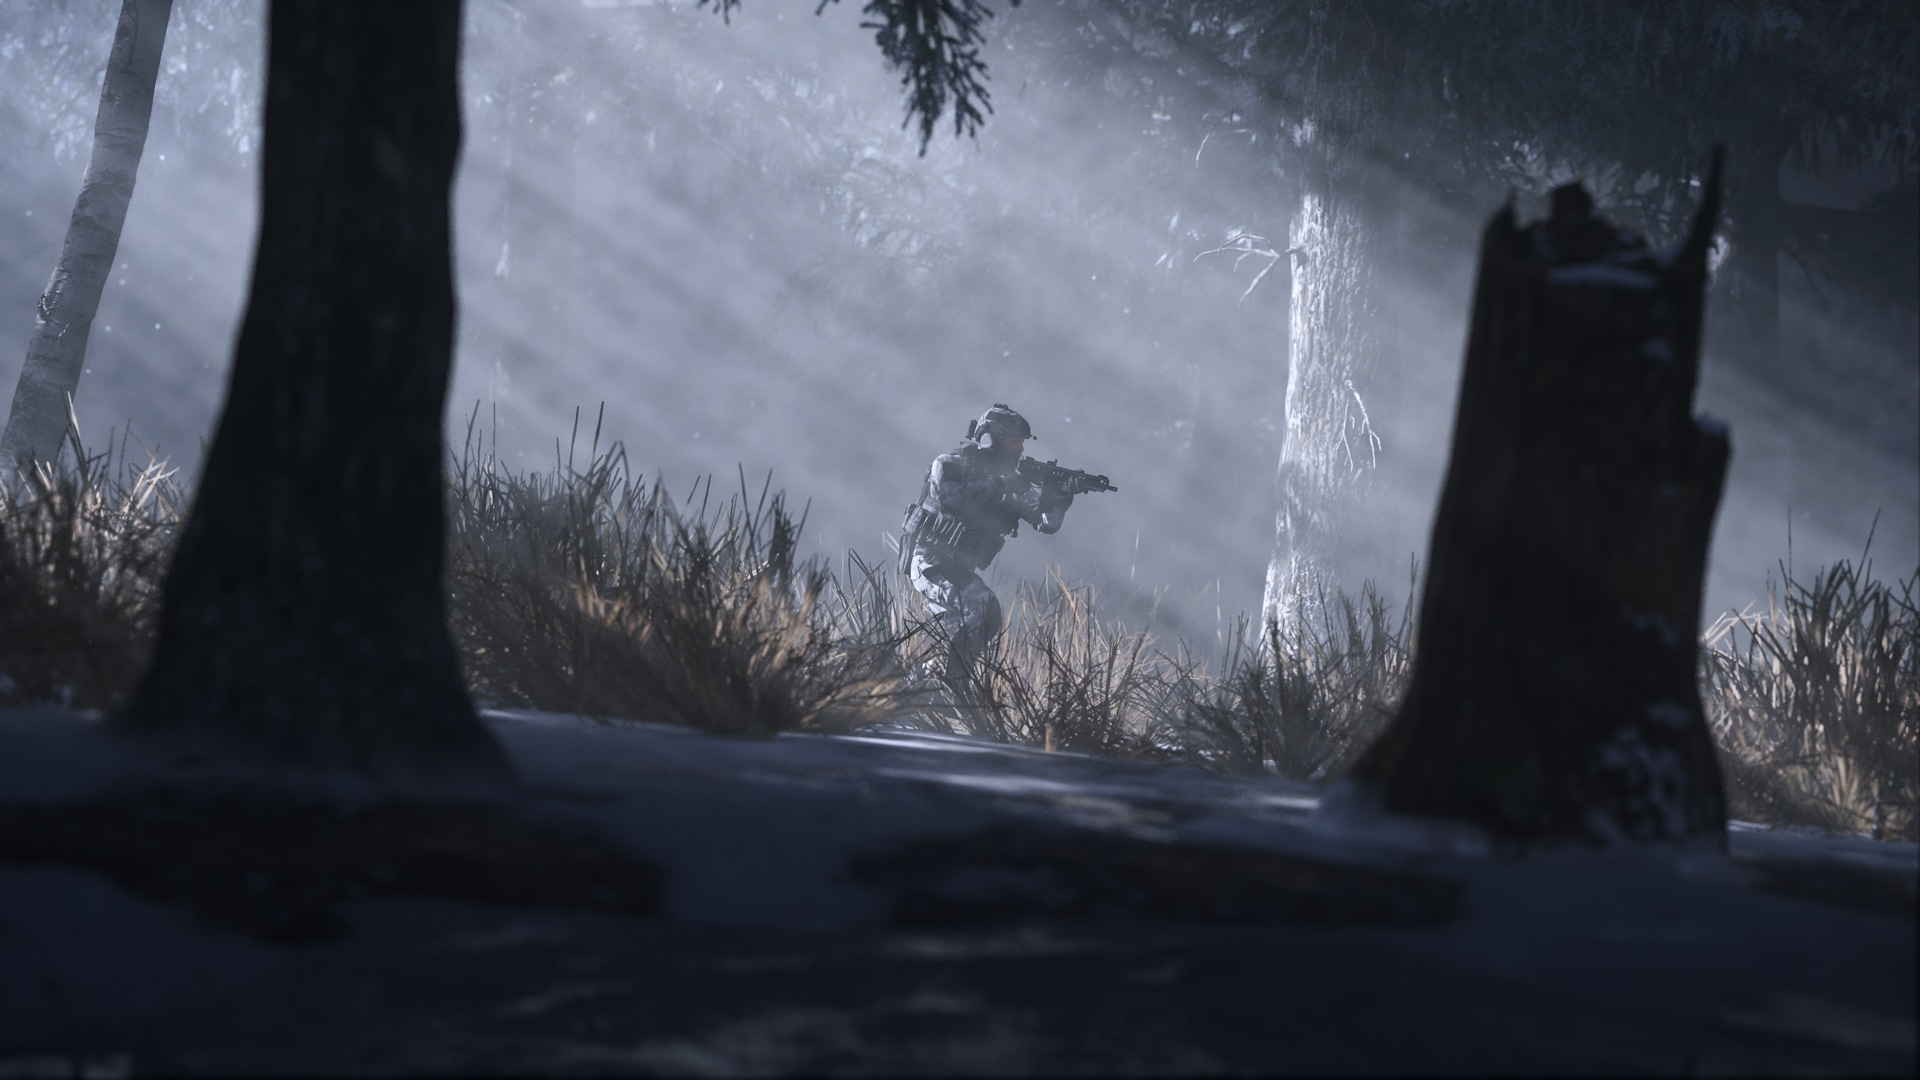 Call Of Duty Modern Warfare III COD MW3 PS5 **In Stock**